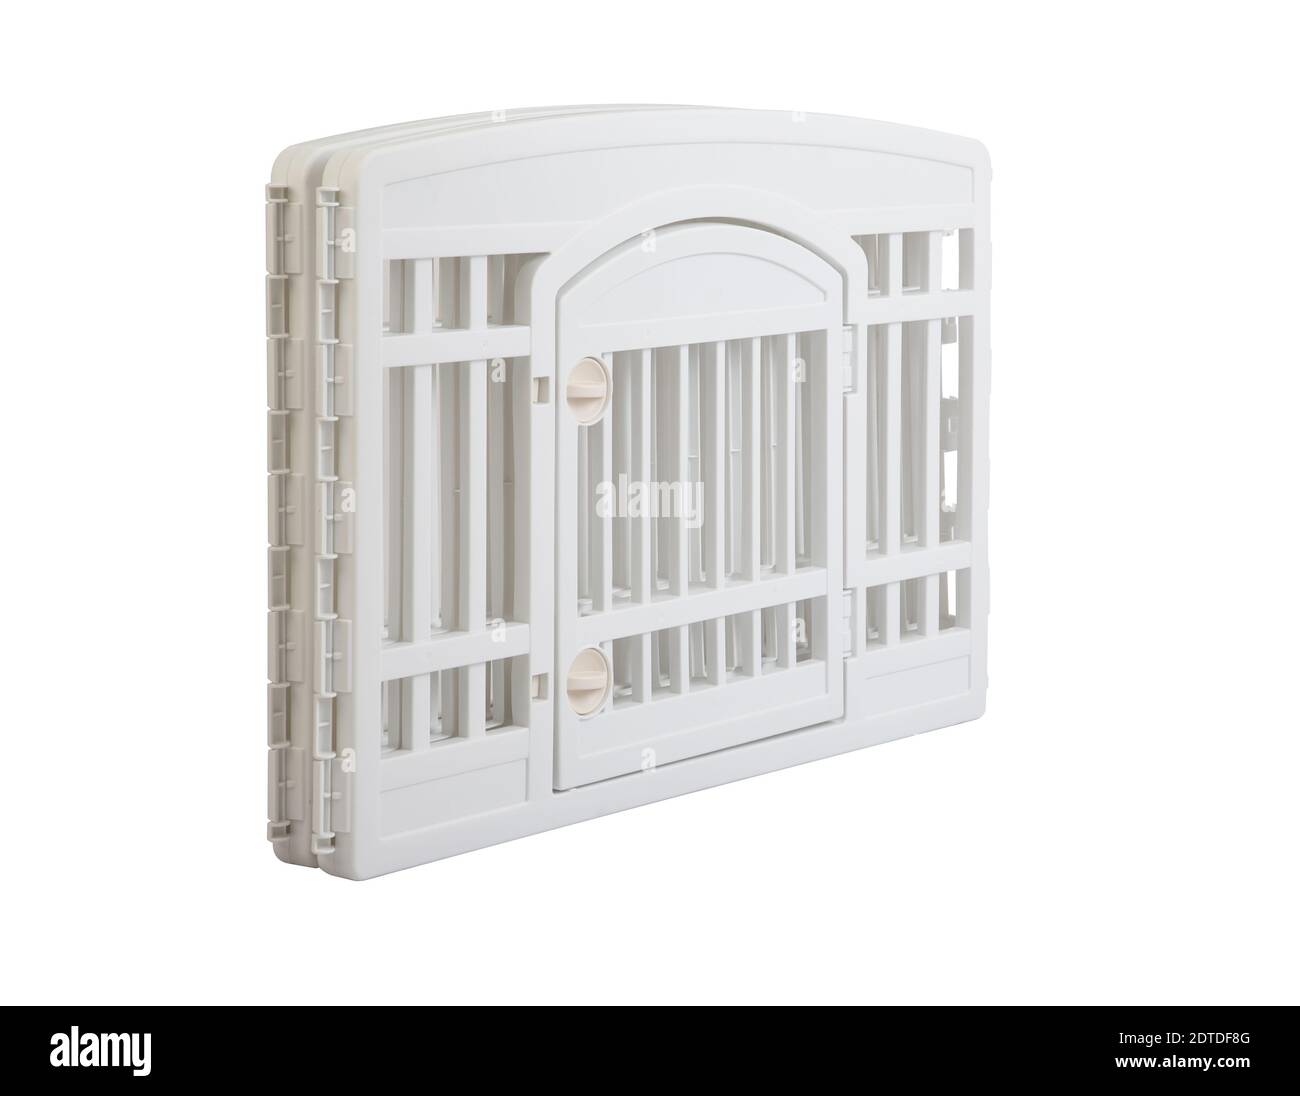 Foldable plastic dog or pet cage isolated on white background Stock Photo